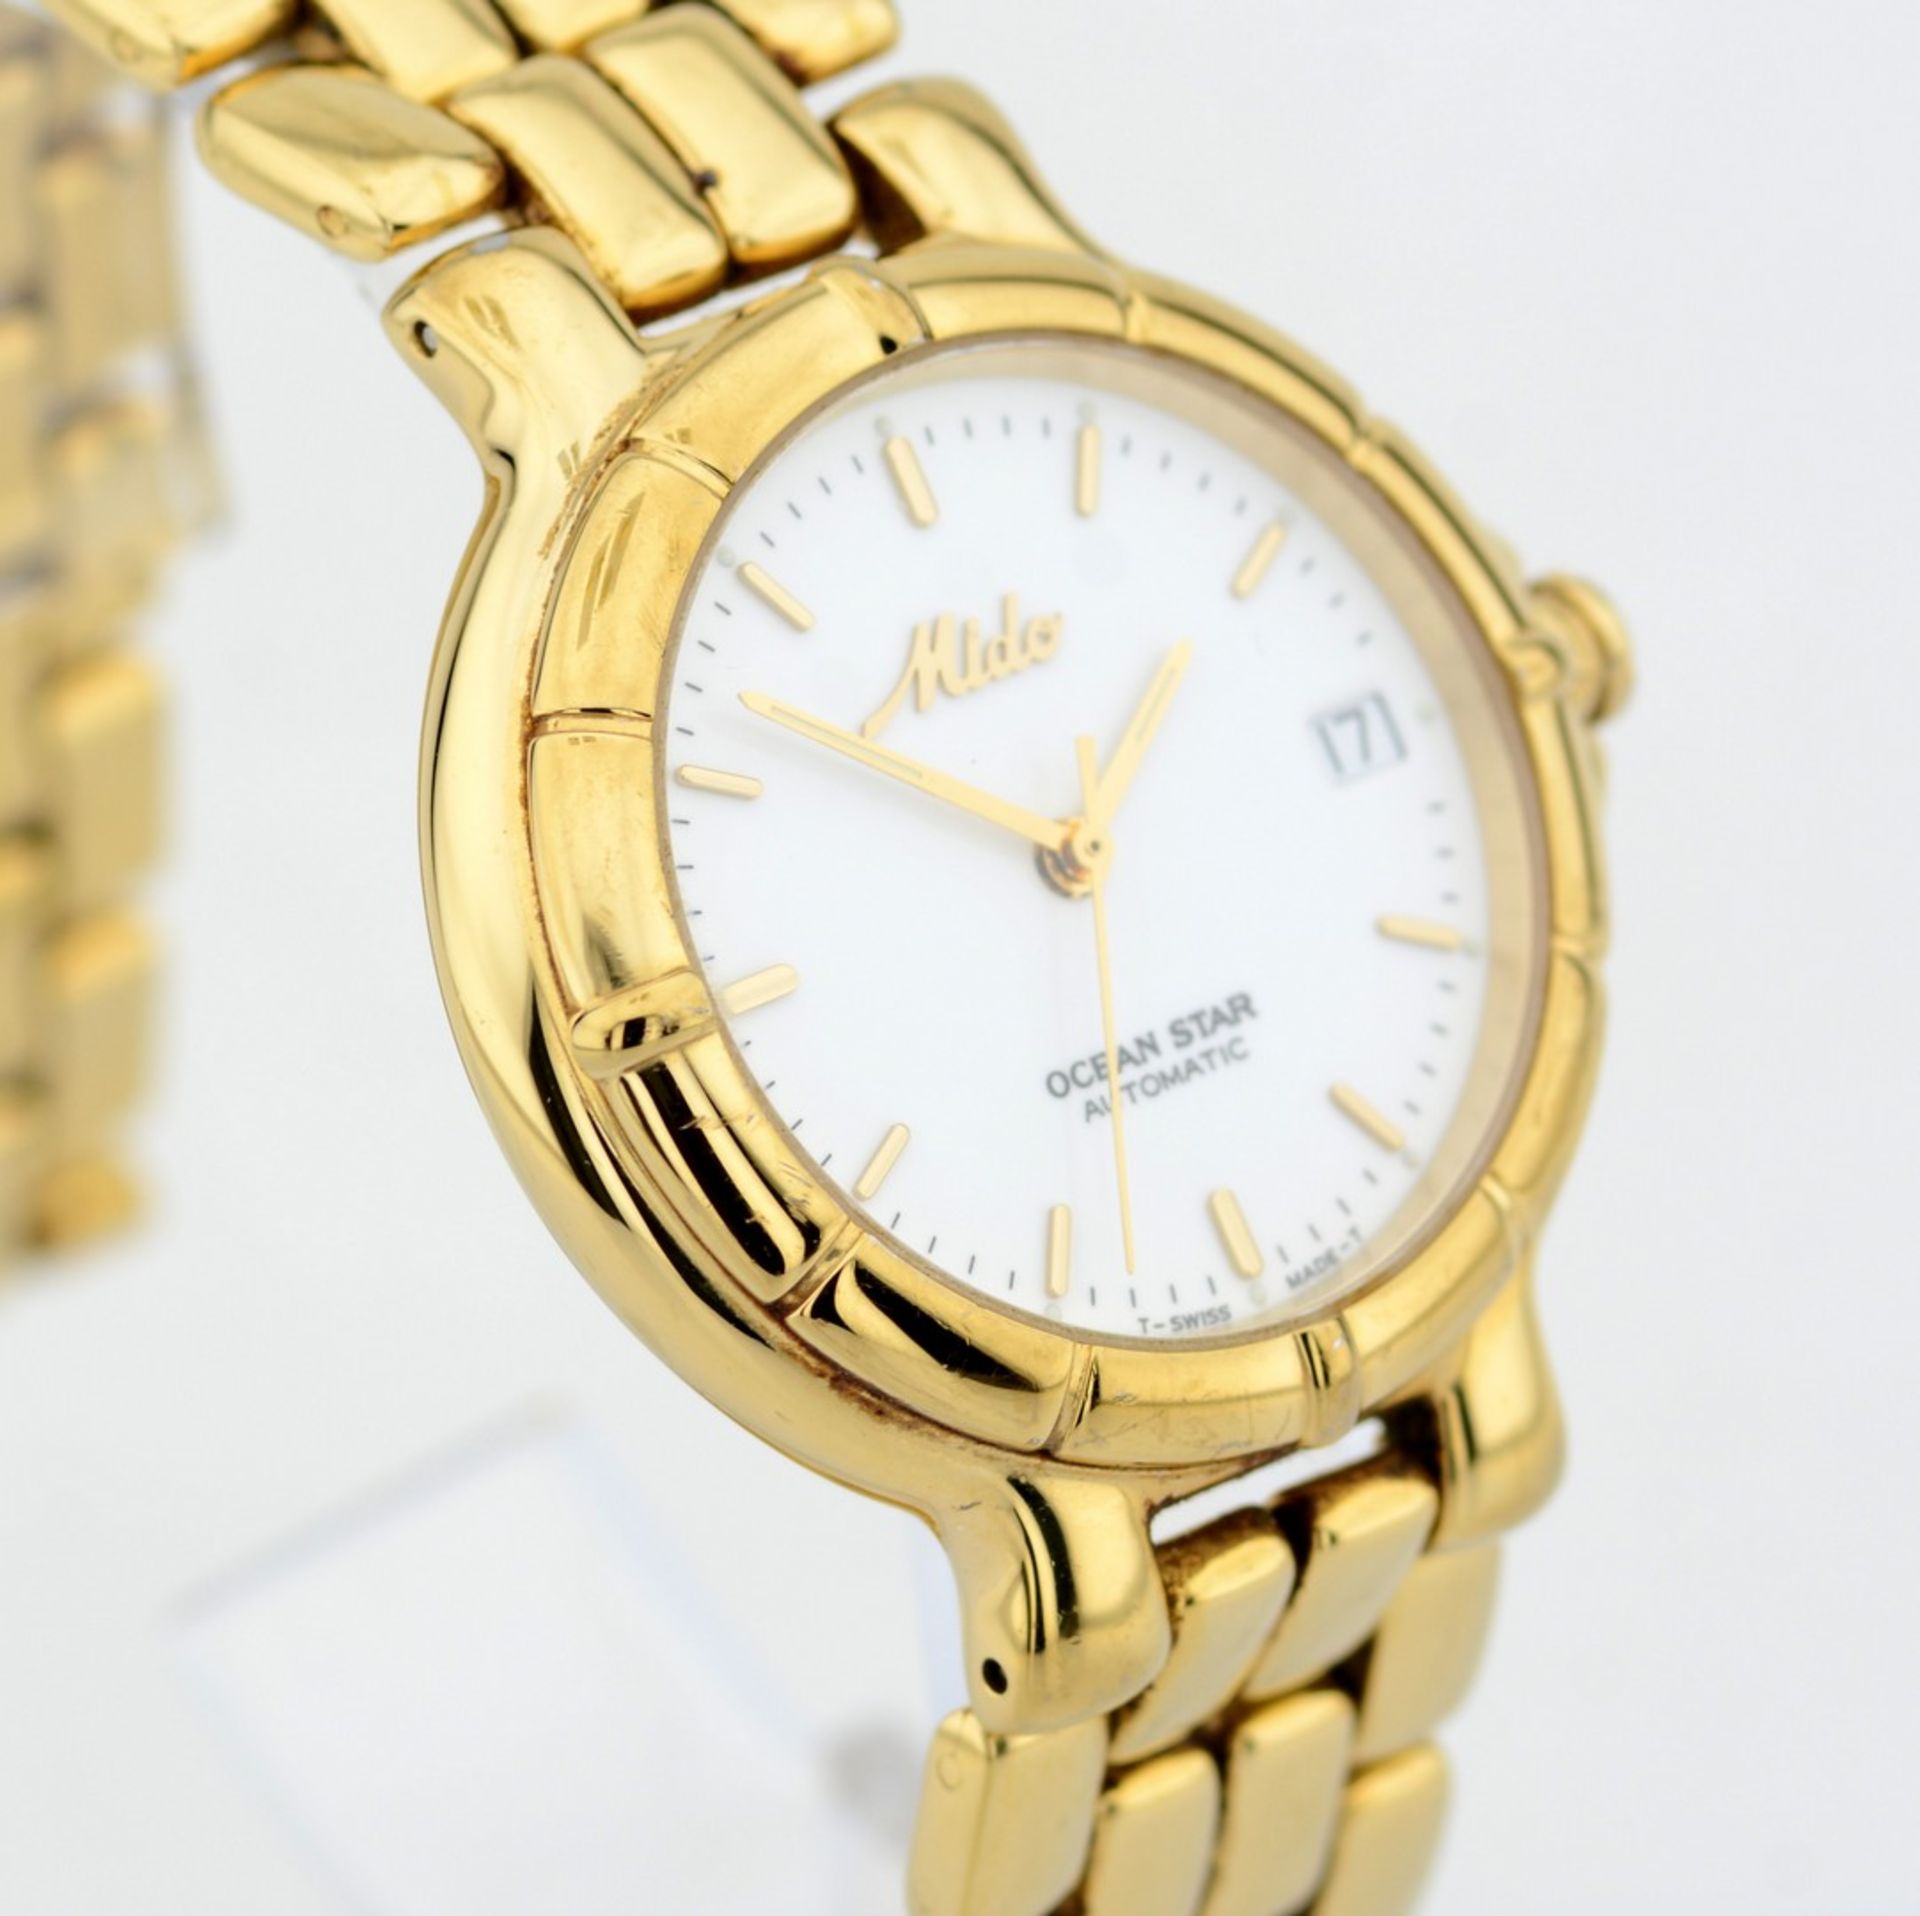 Mido / Ocean Star Automatic Date - Gentlmen's Gold-plated Wrist Watch - Image 6 of 6